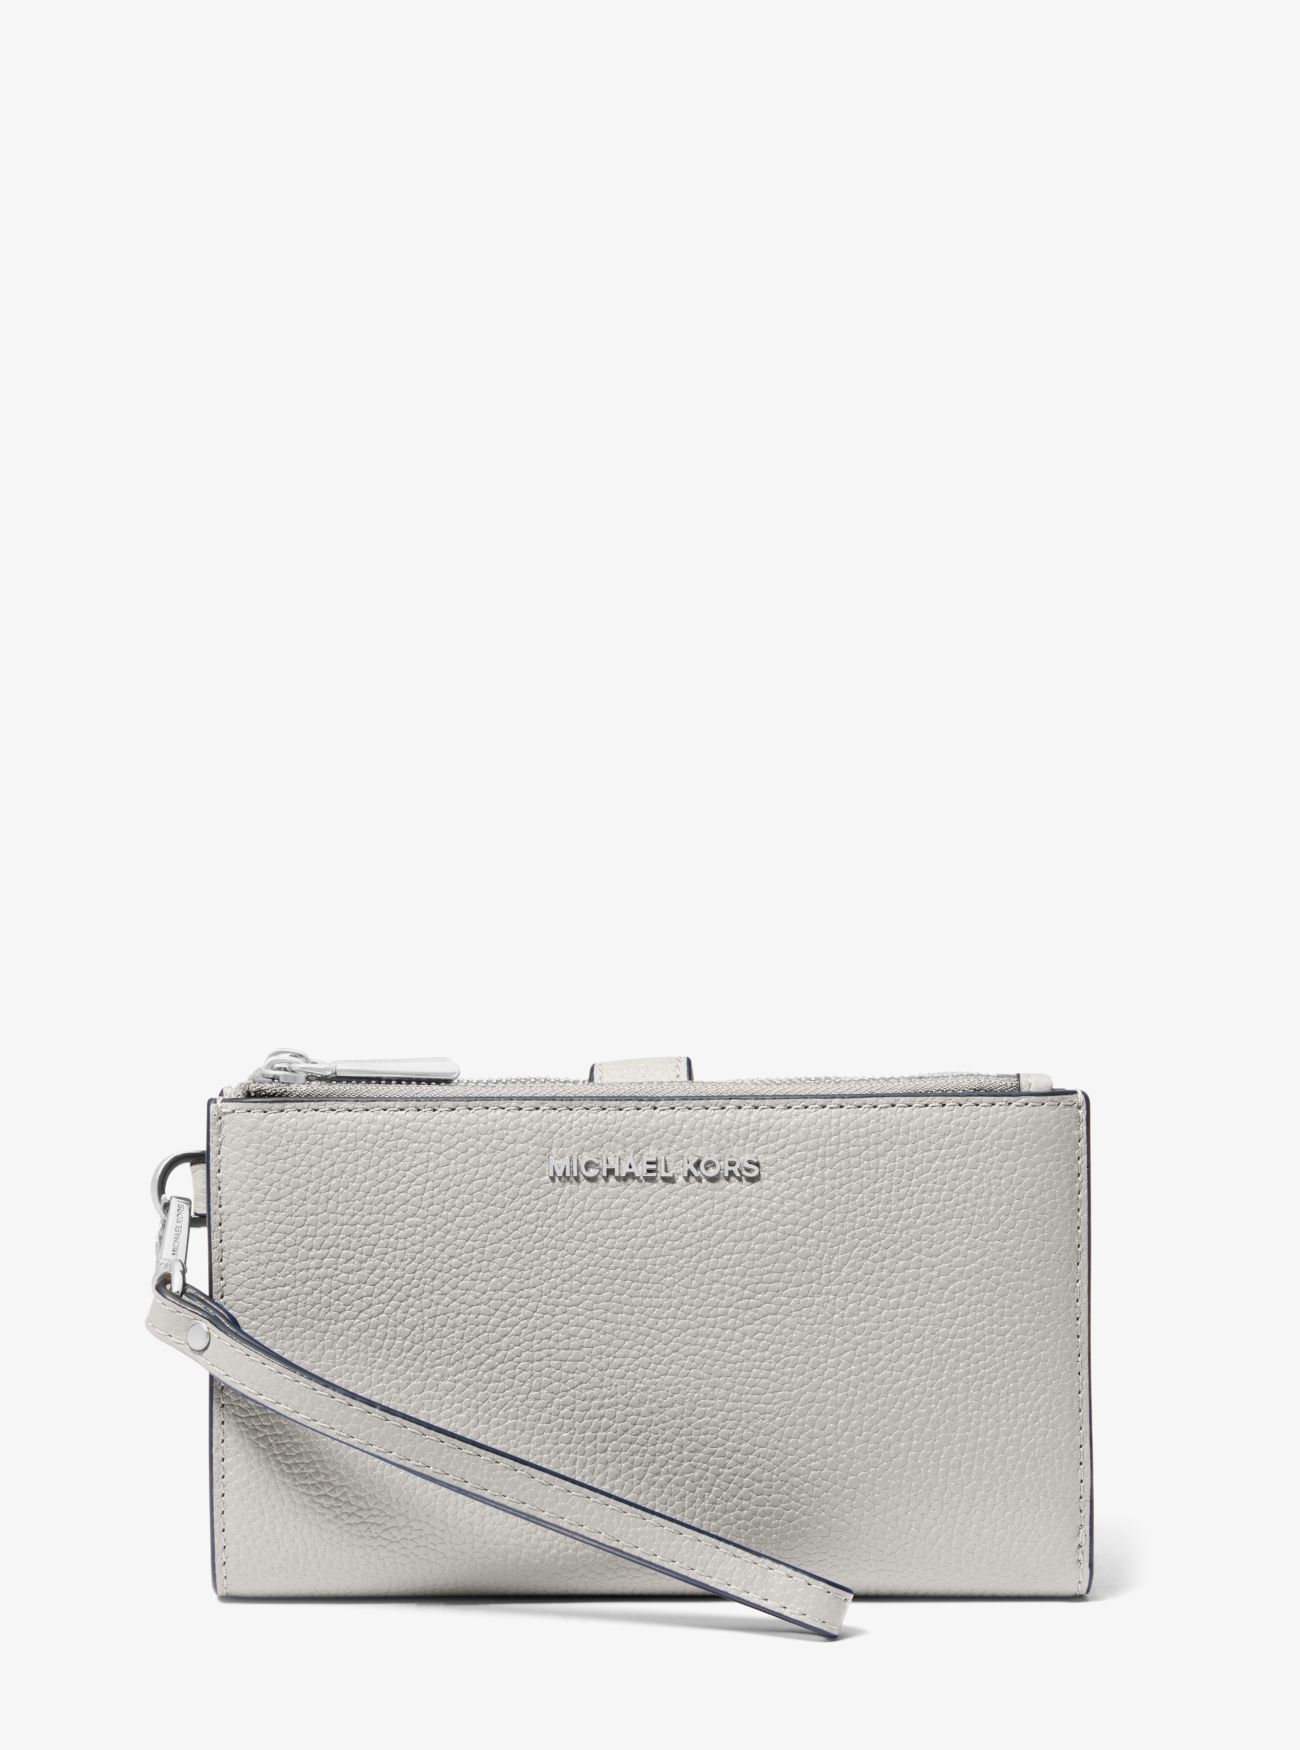 MK Adele Leather Smartphone Wallet - Grey - Michael Kors